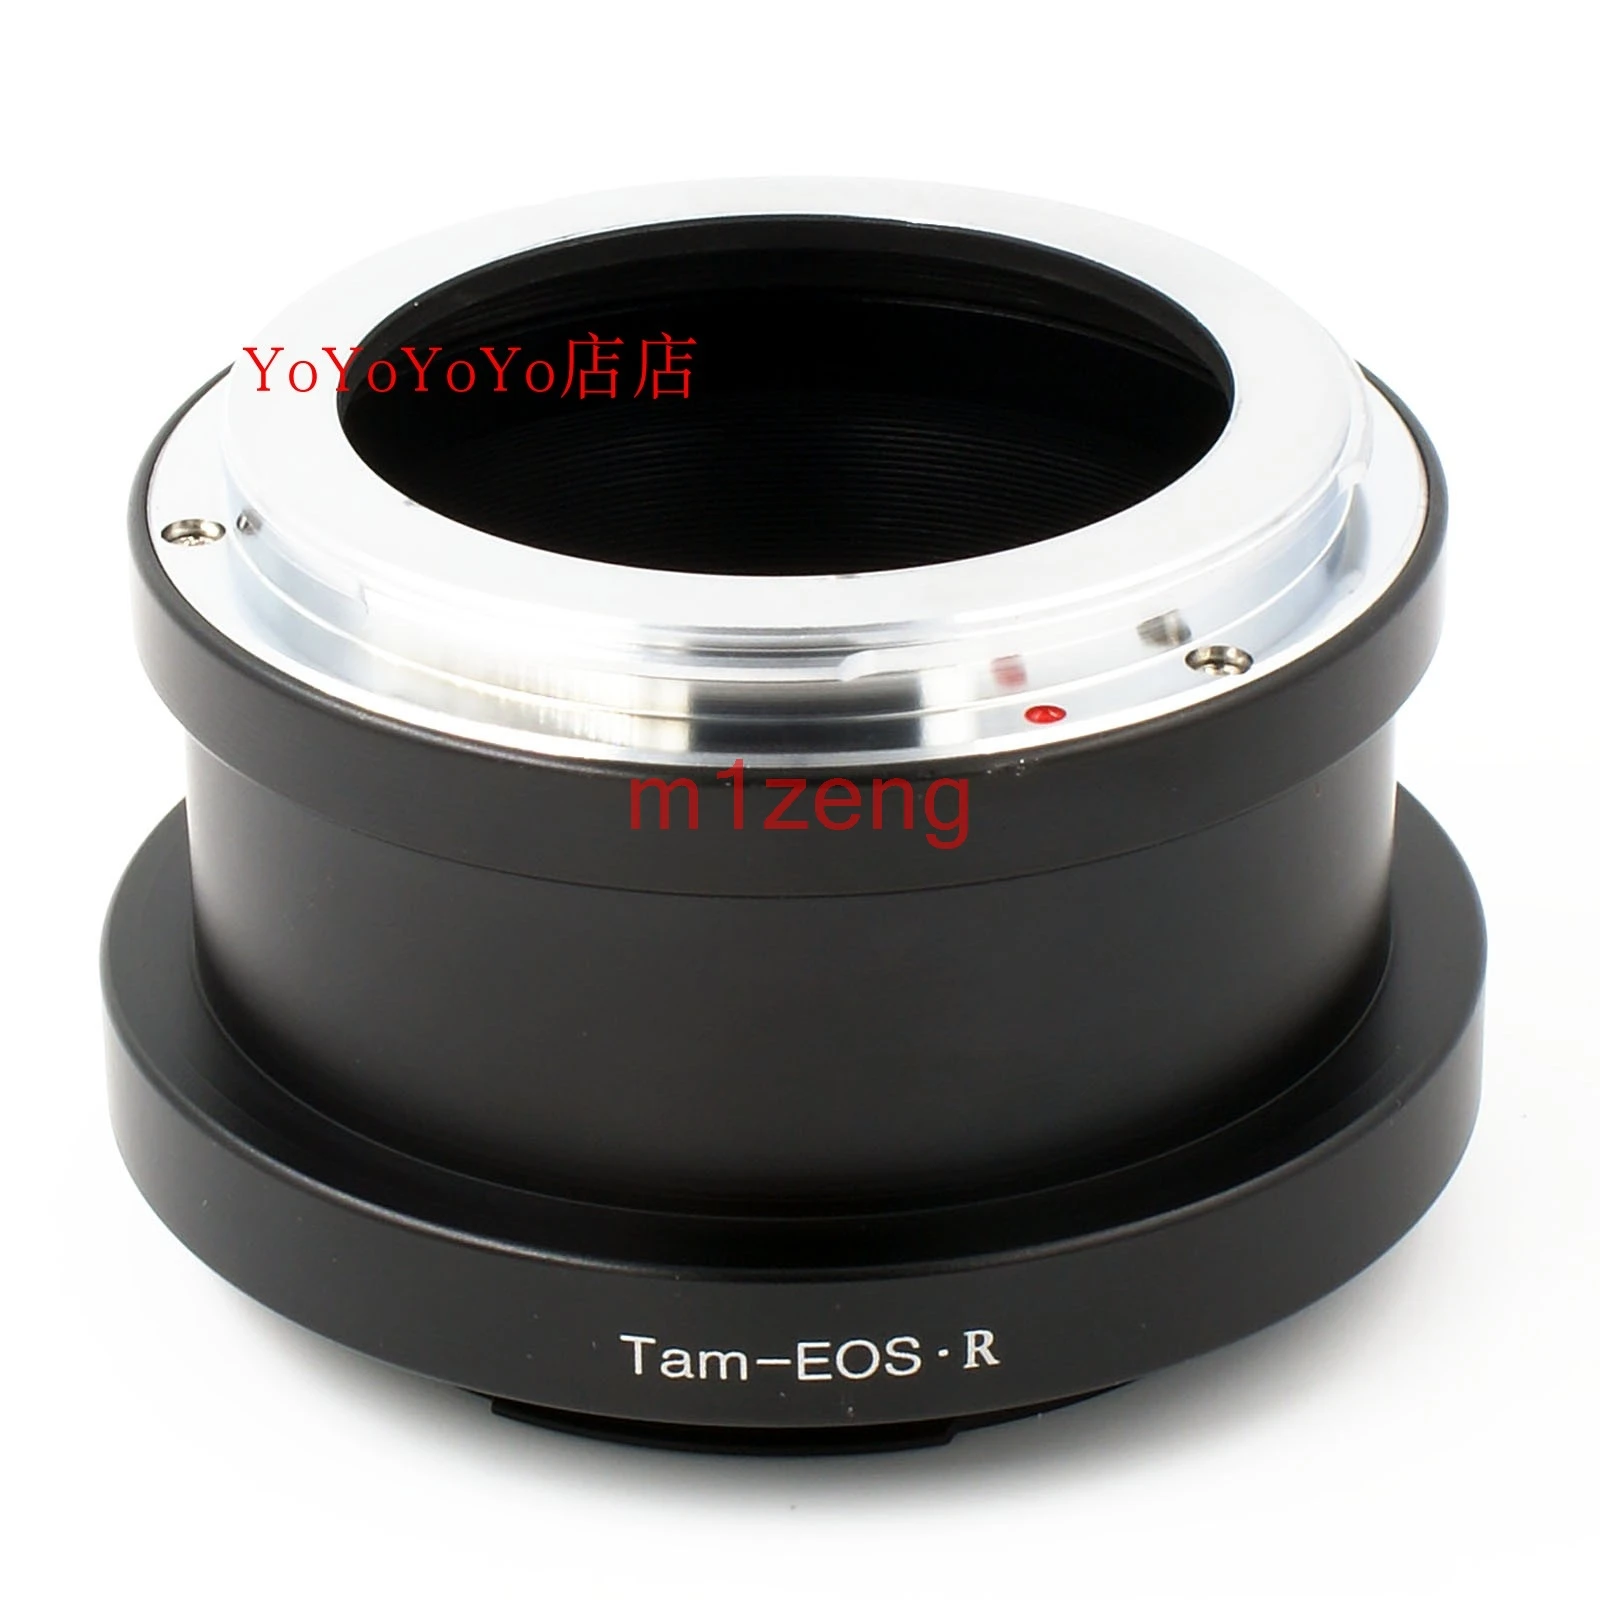 

TAMRON-EOSR Adapter Ring for TAMRON Lens to canon EOSR RP EOS.R RF mount full frame camera